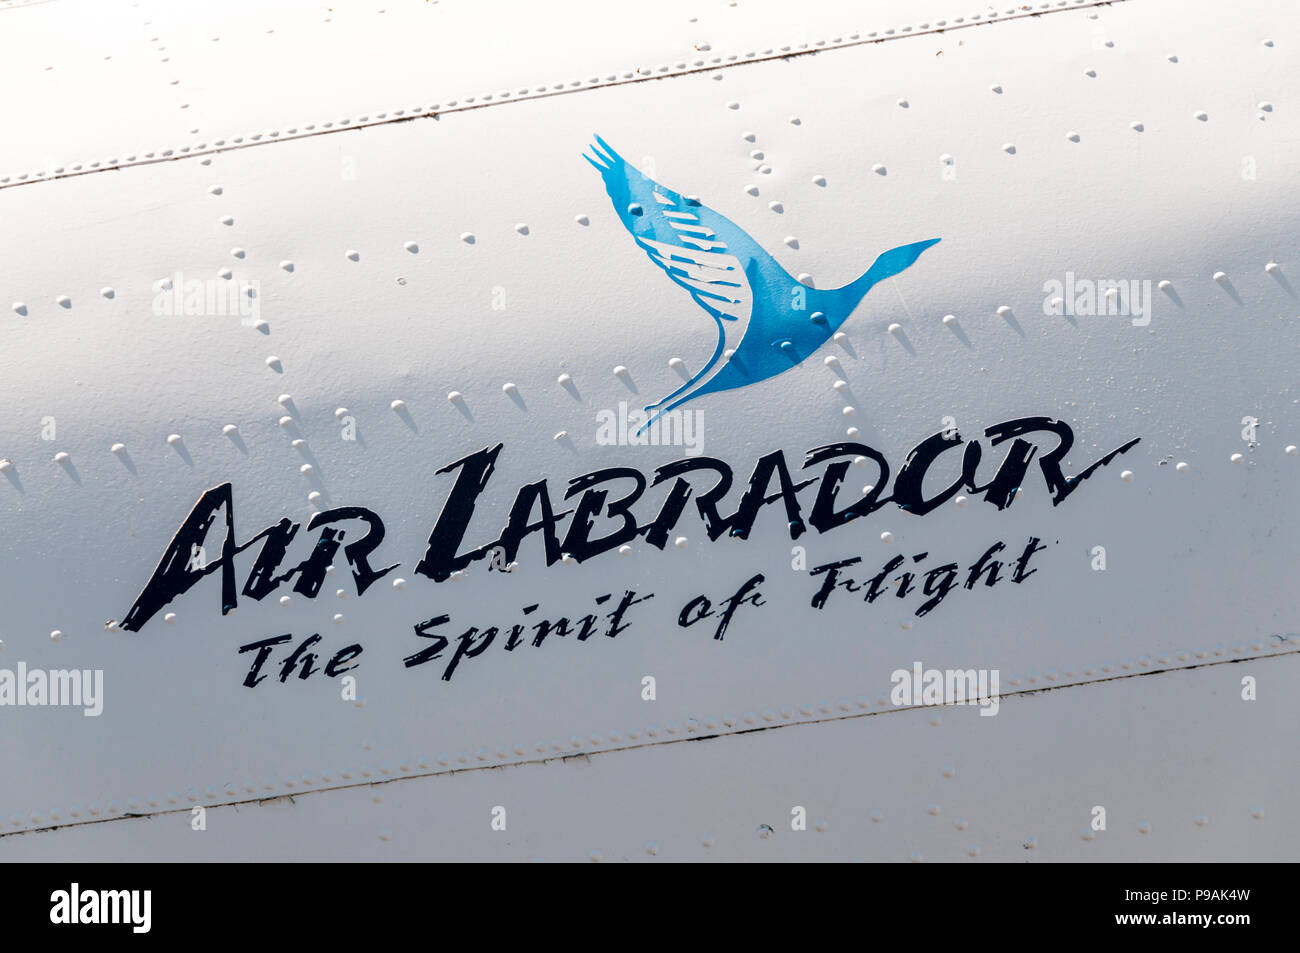 Air Labrador logo on the side of an aircraft Stock Photo